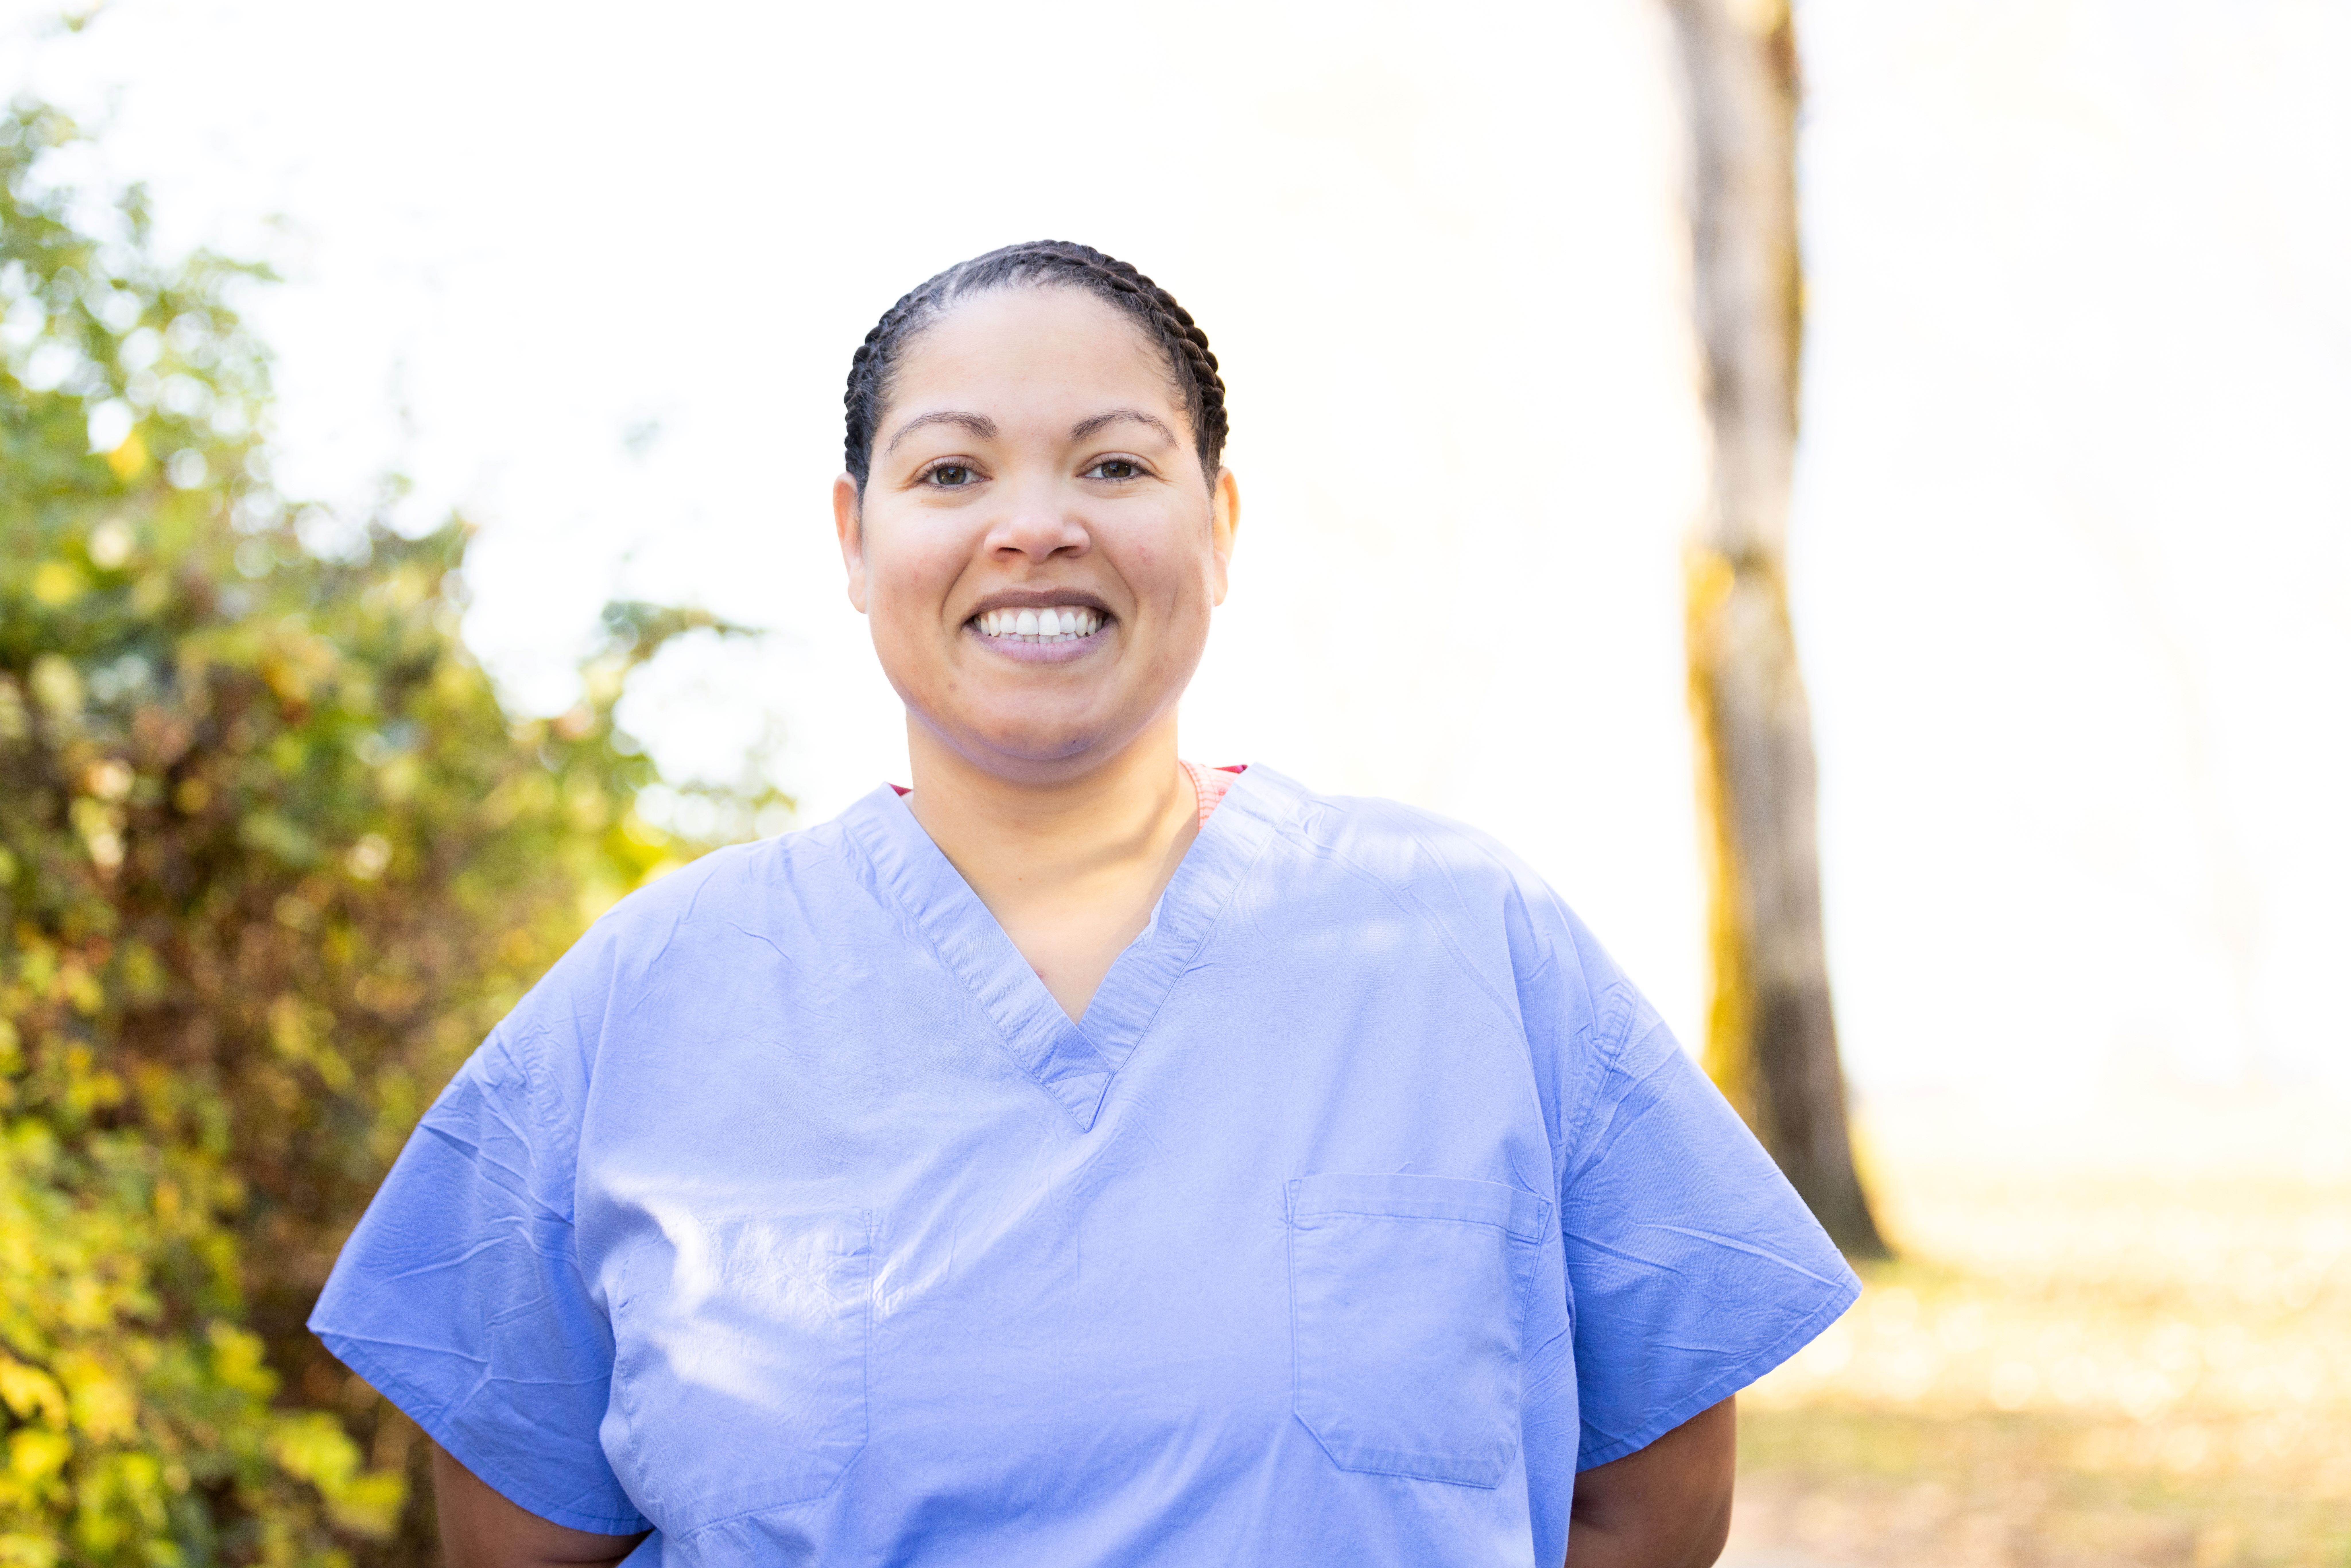 Graduate health care scholar smiling in scrubs